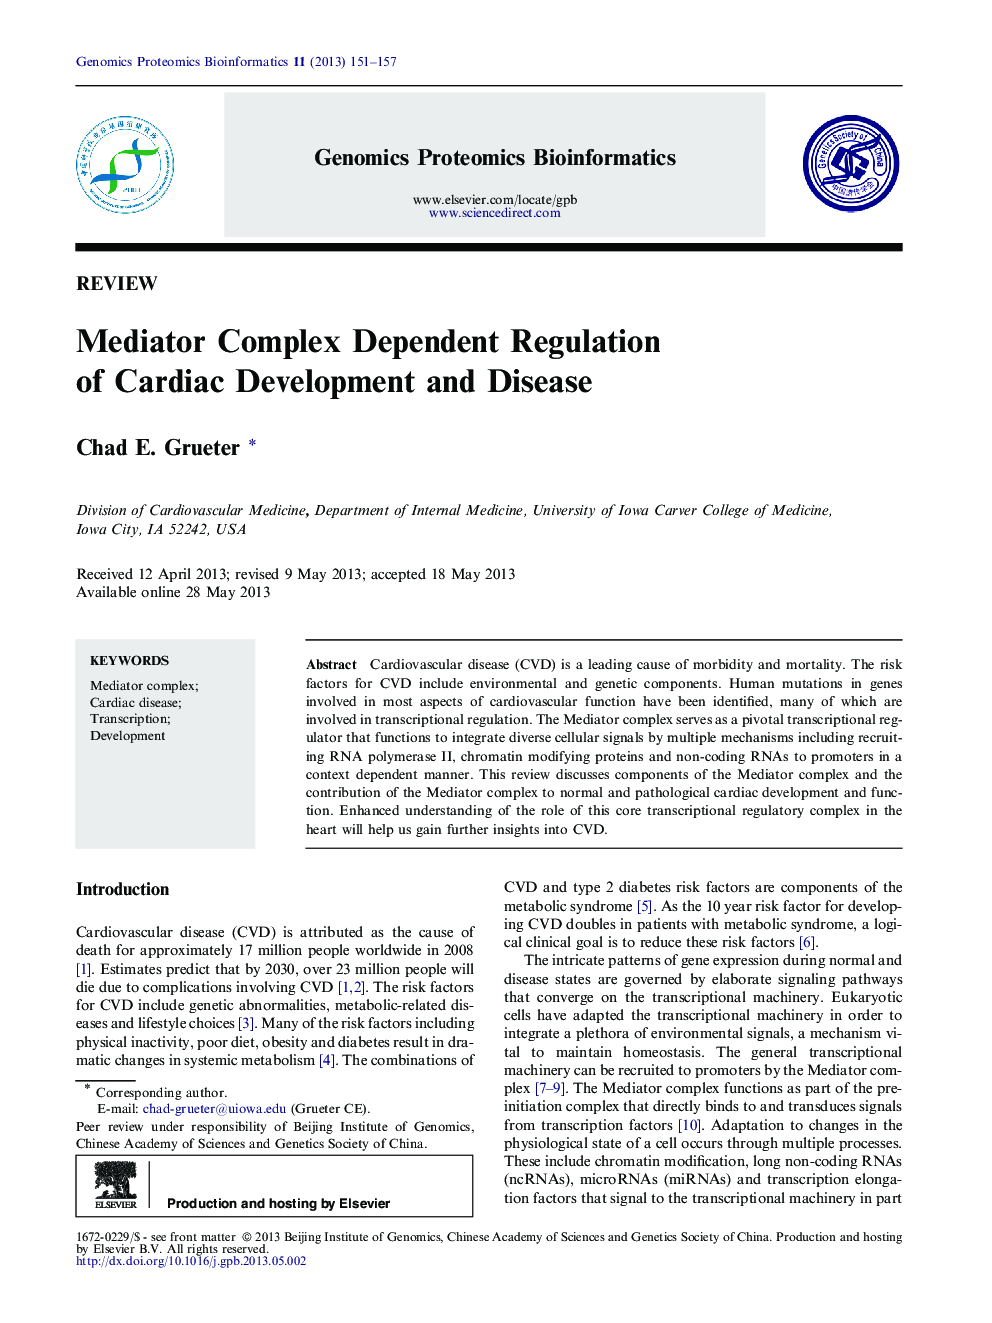 Mediator Complex Dependent Regulation of Cardiac Development and Disease 